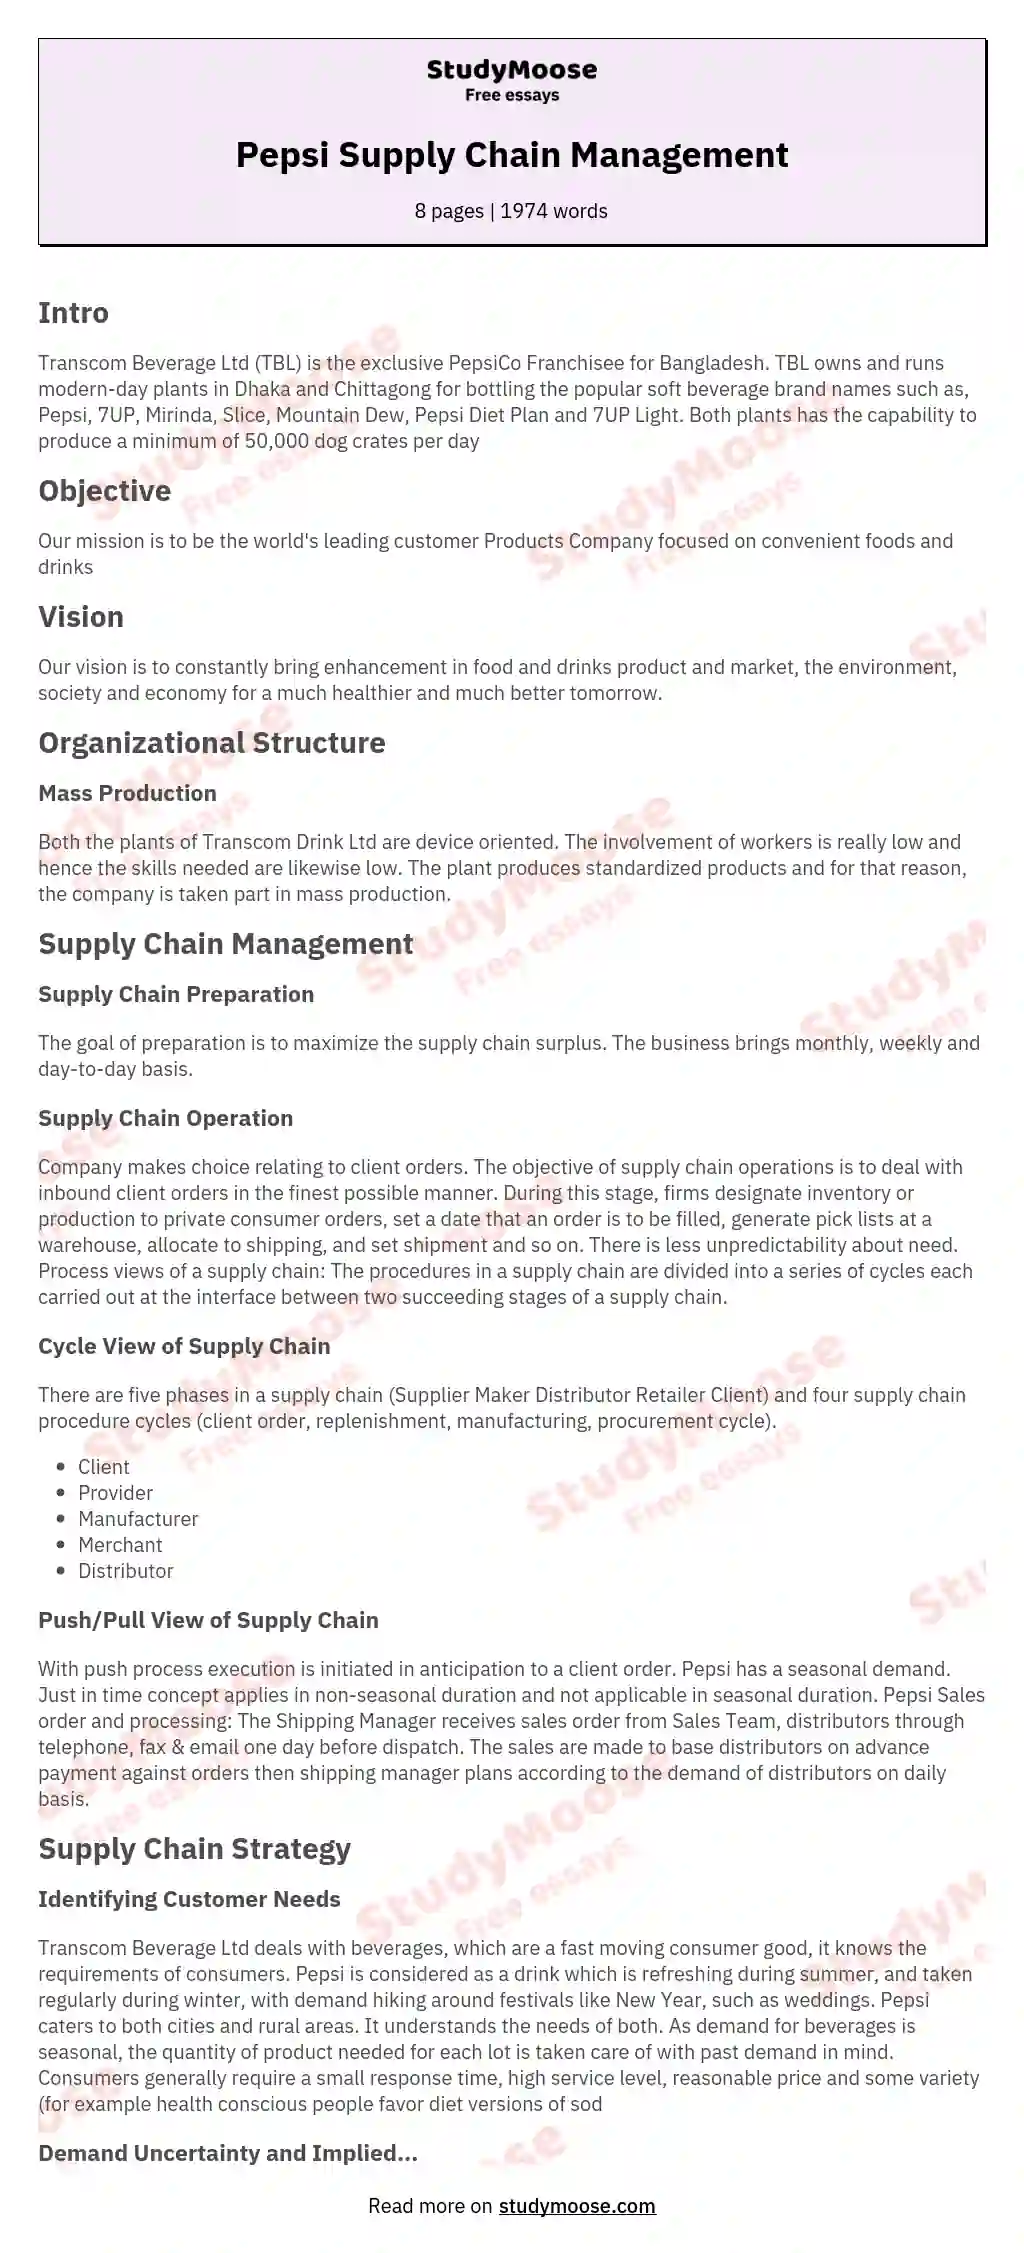 Pepsi Supply Chain Management essay